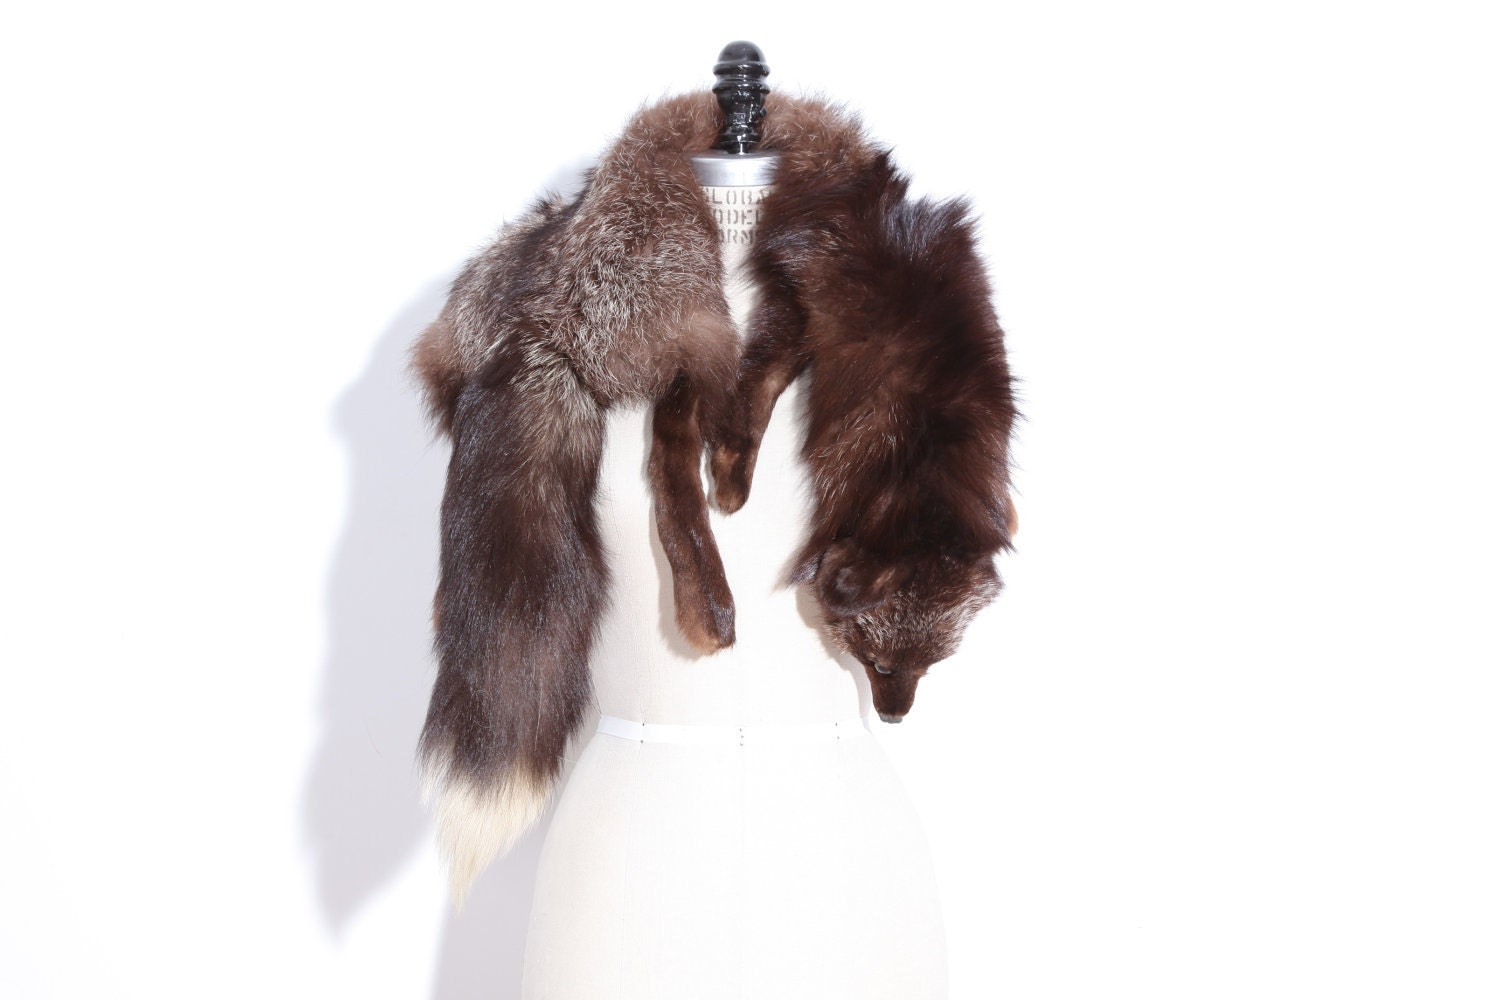 vintage large full body fox fur scarf by blackgatestudio on Etsy